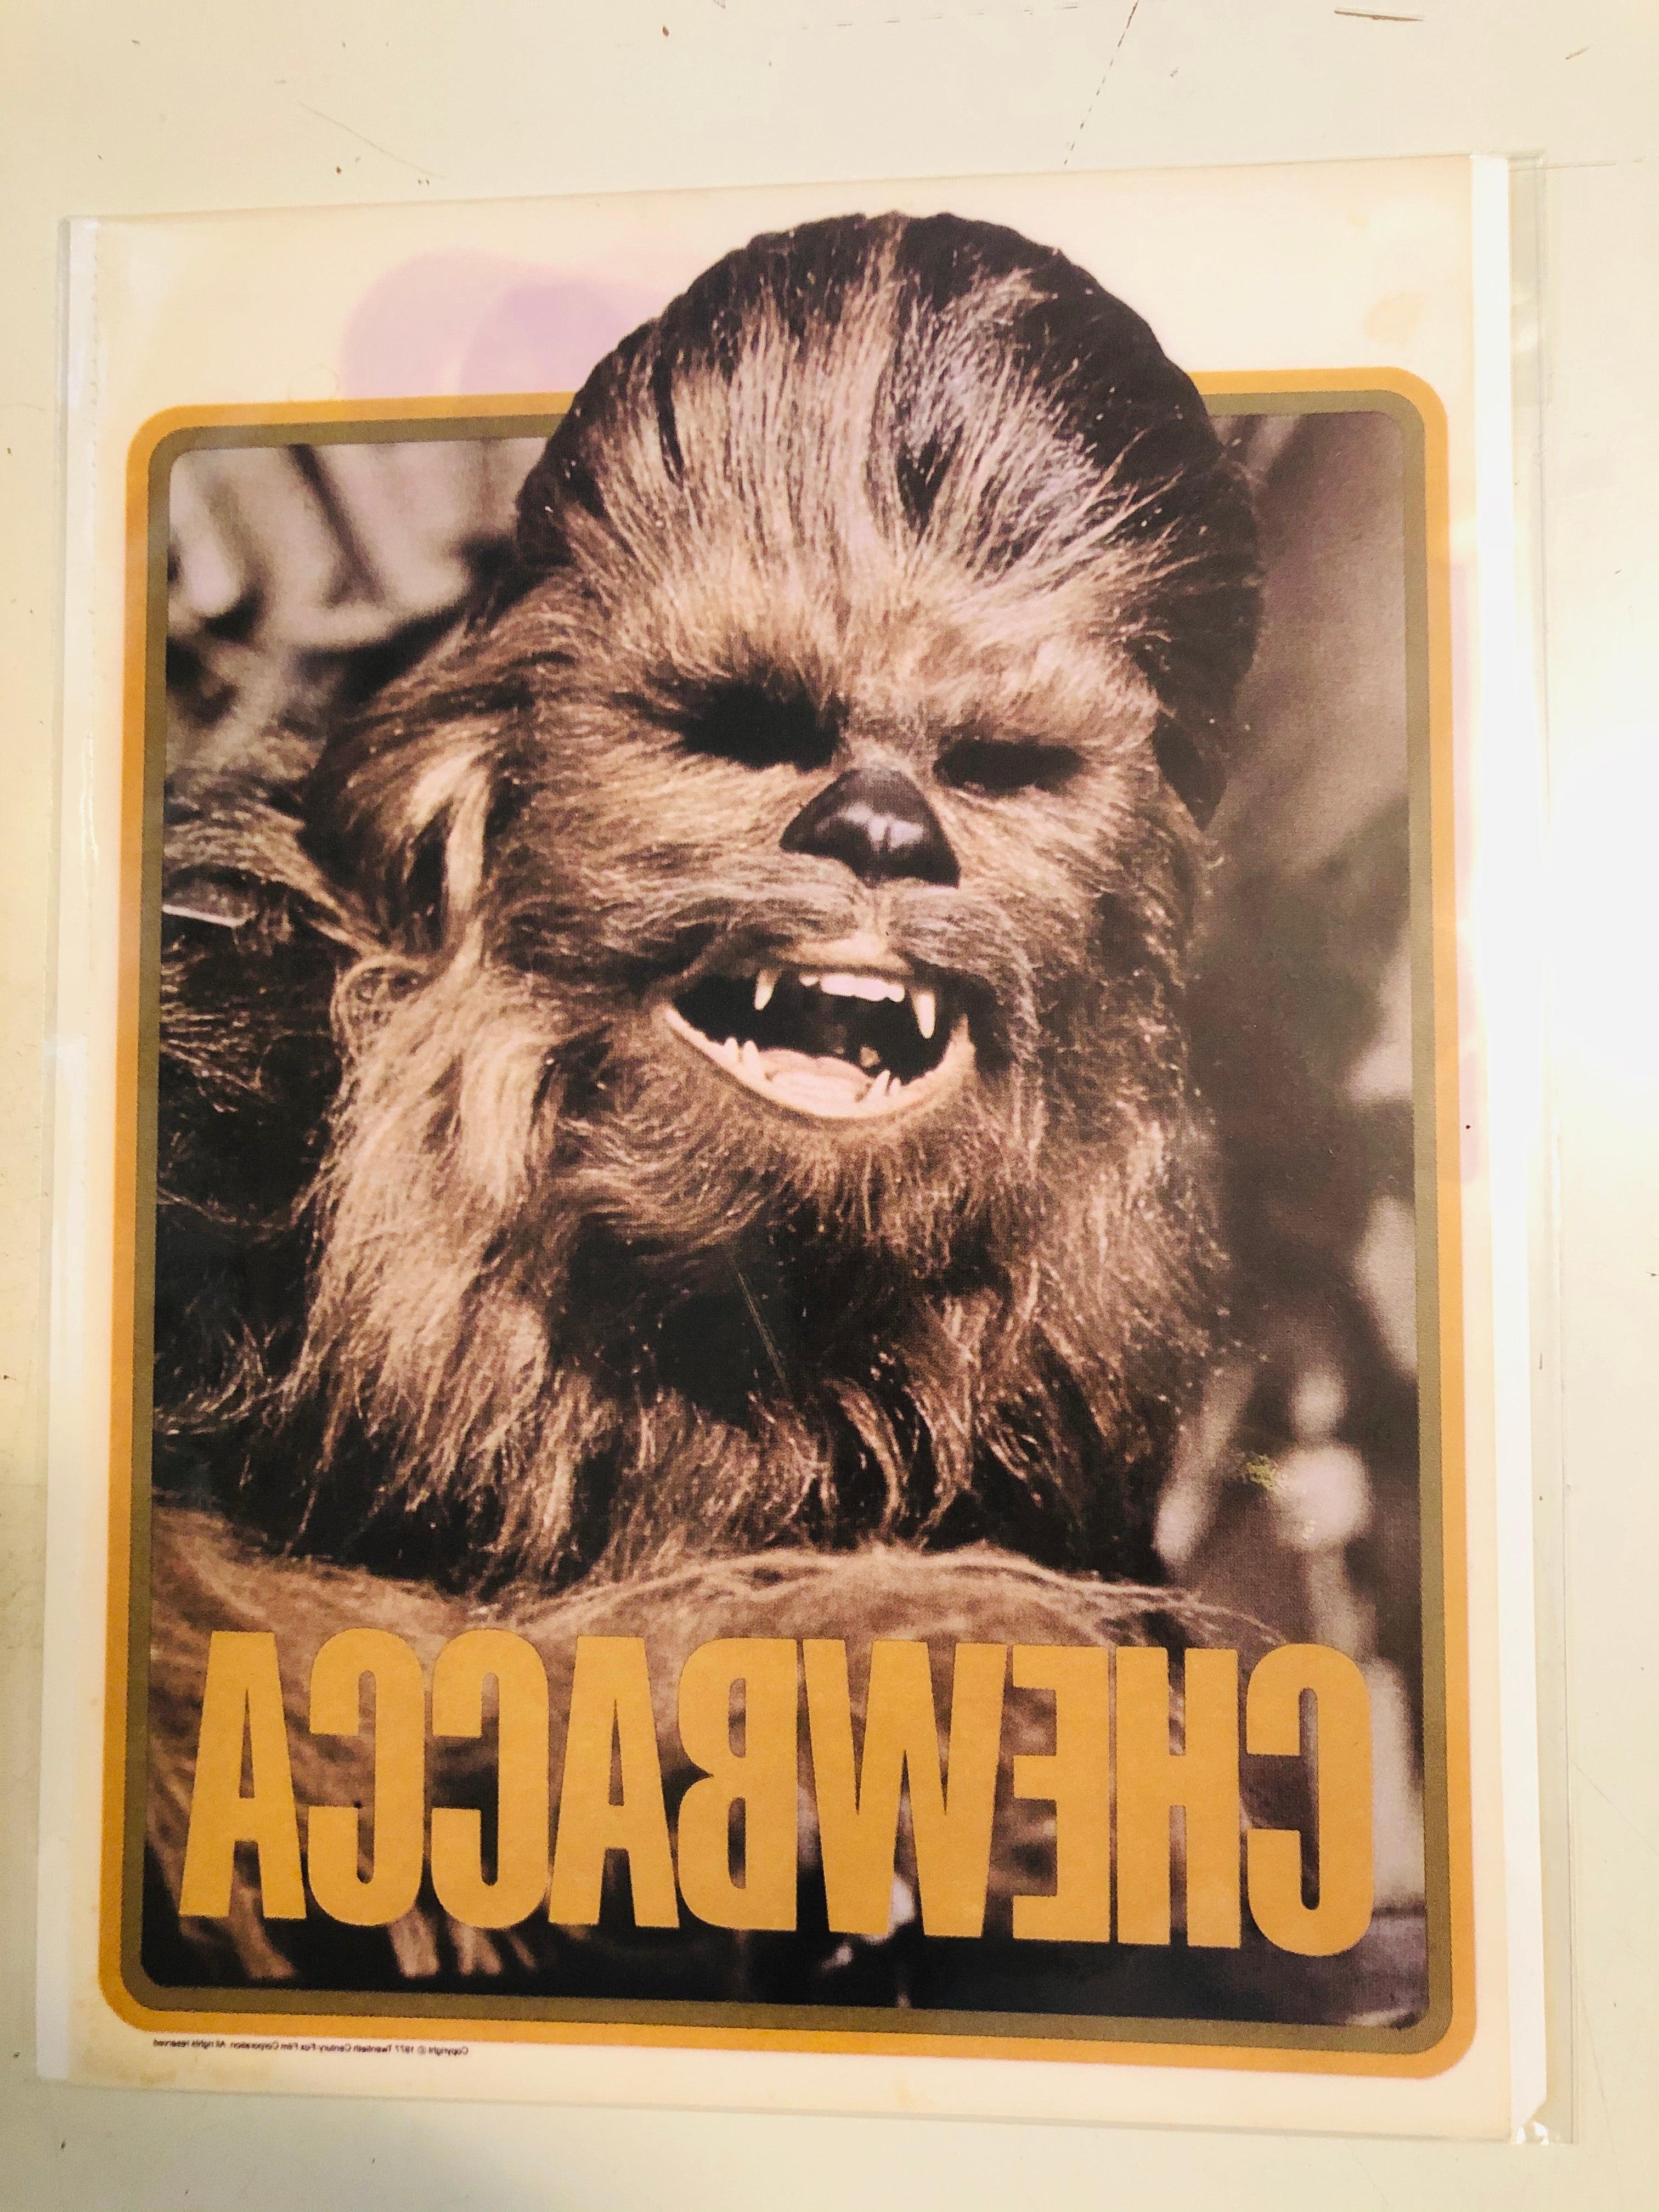 Star Wars Chewbacca original iron on transfer 1977